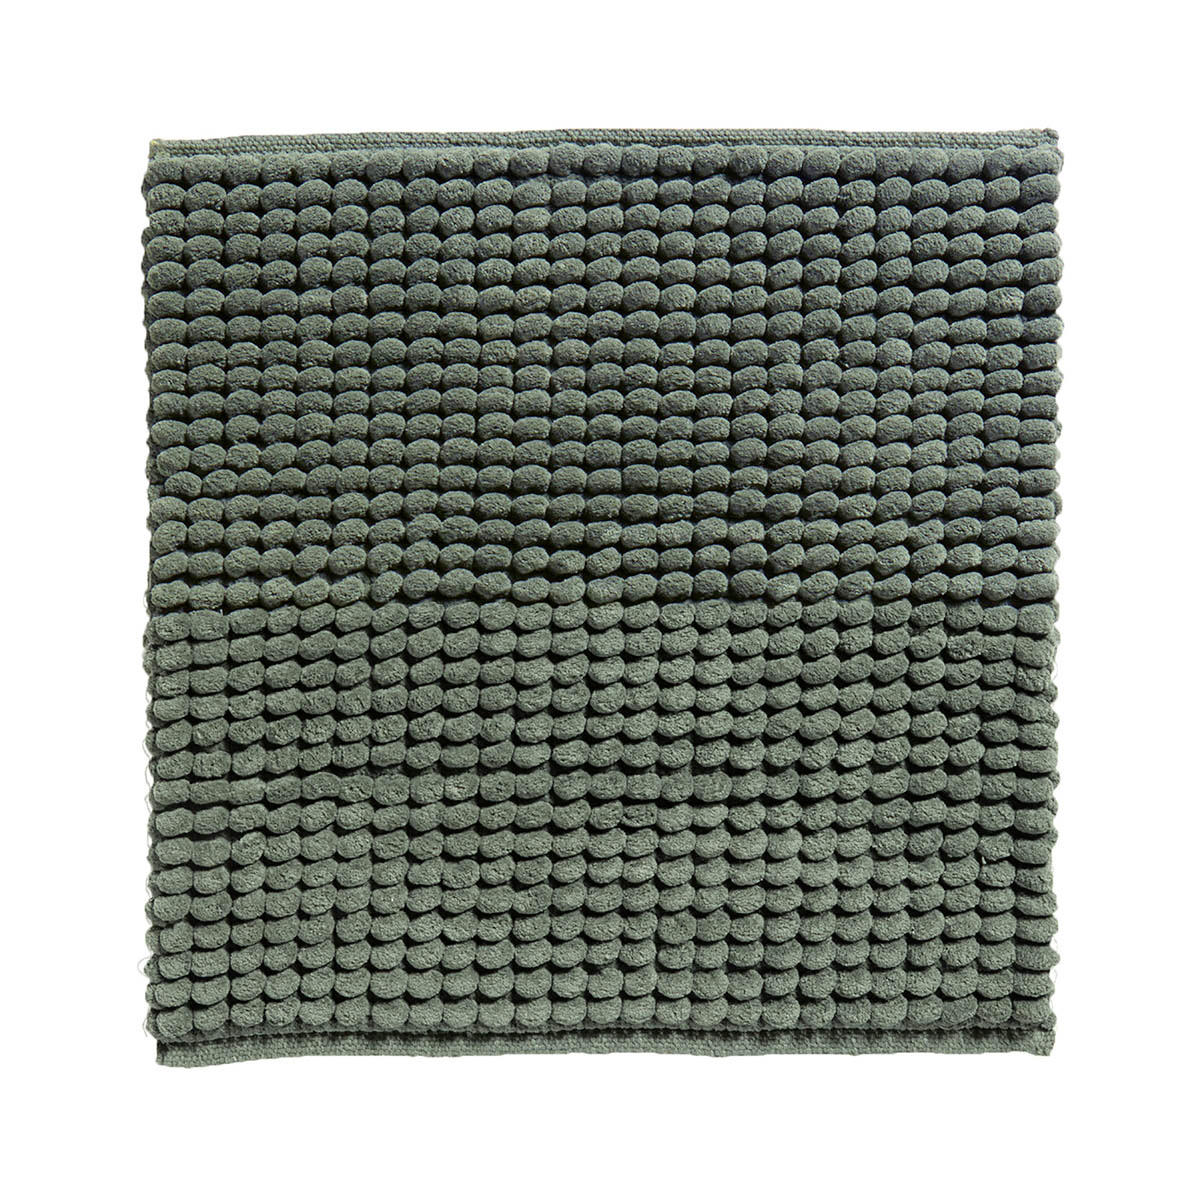 BADTEPPICH AXEL 60/60 cm  - Grün, Basics, Textil (60/60cm) - Aquanova